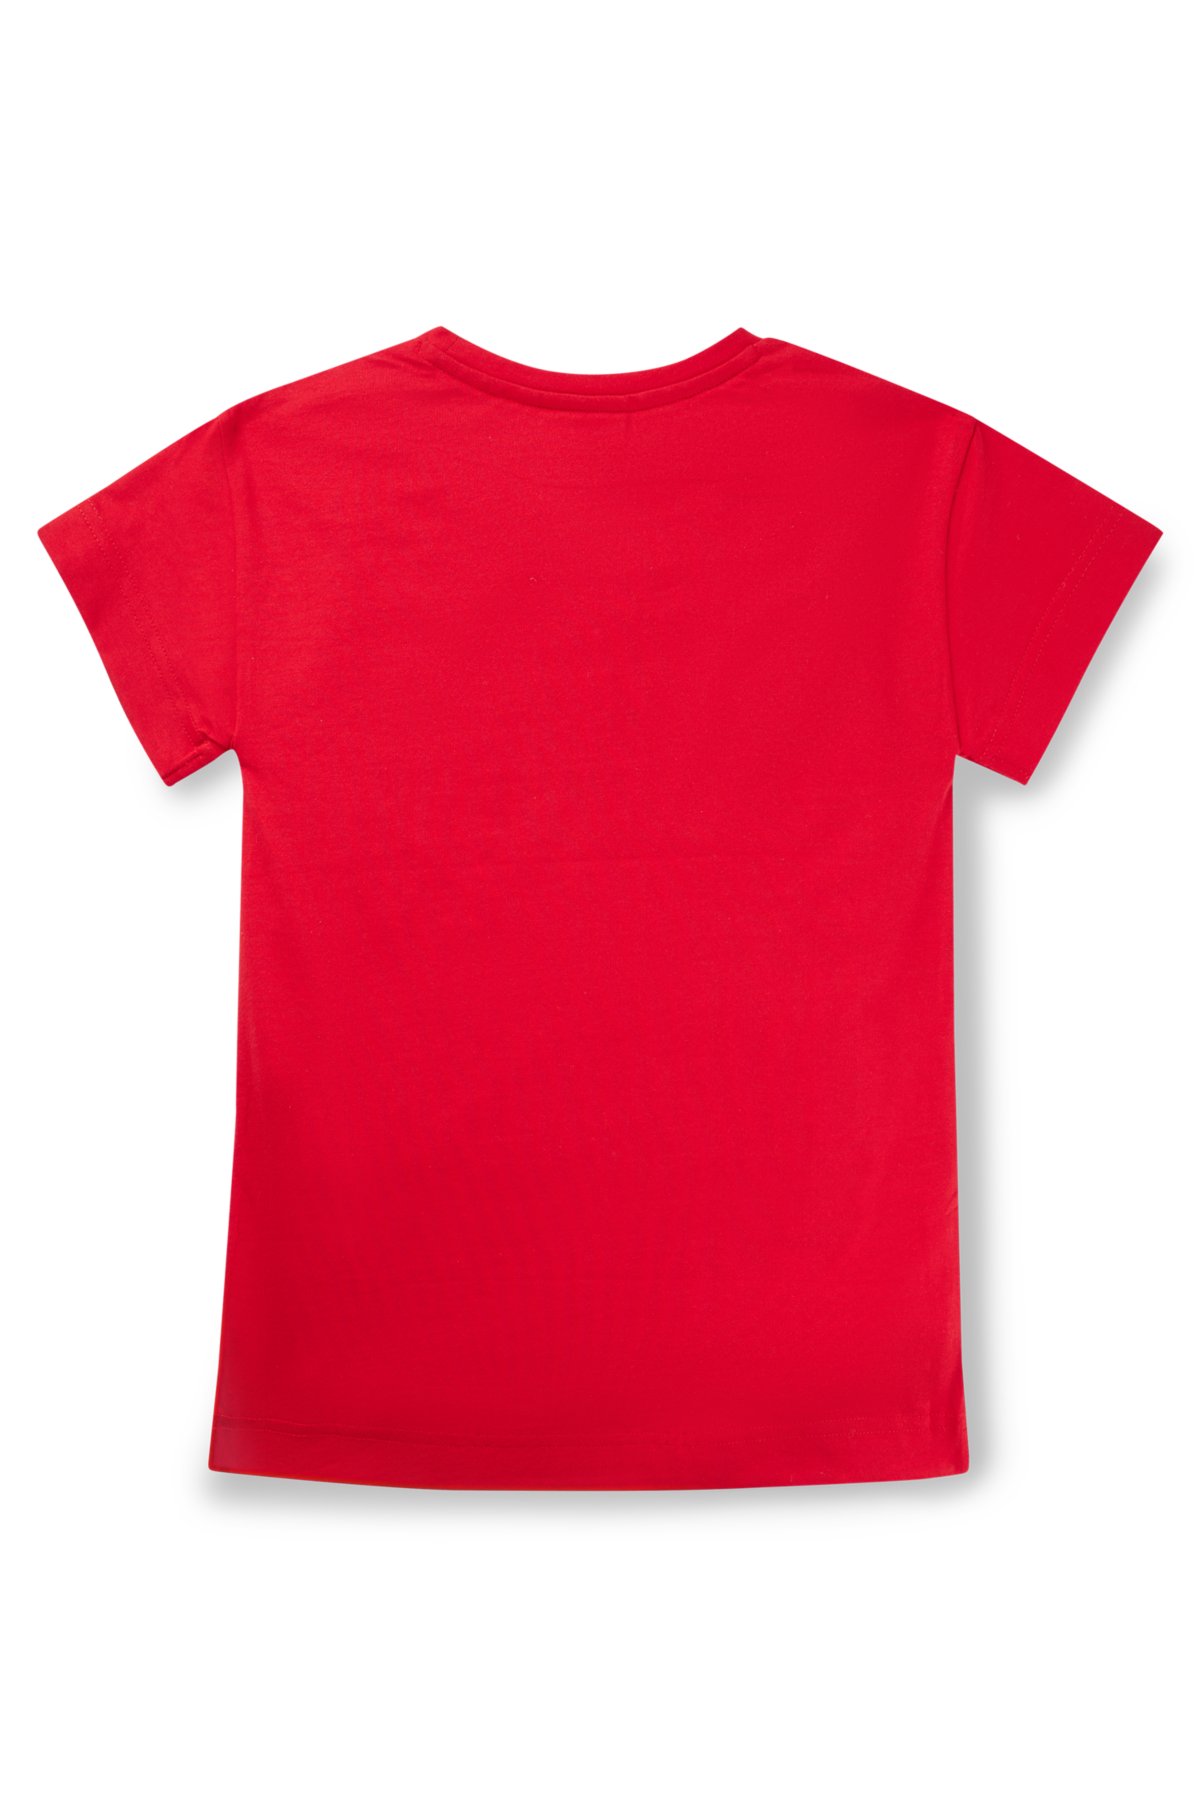 Kids' cotton-jersey T-shirt dress with studded logo artwork, Red